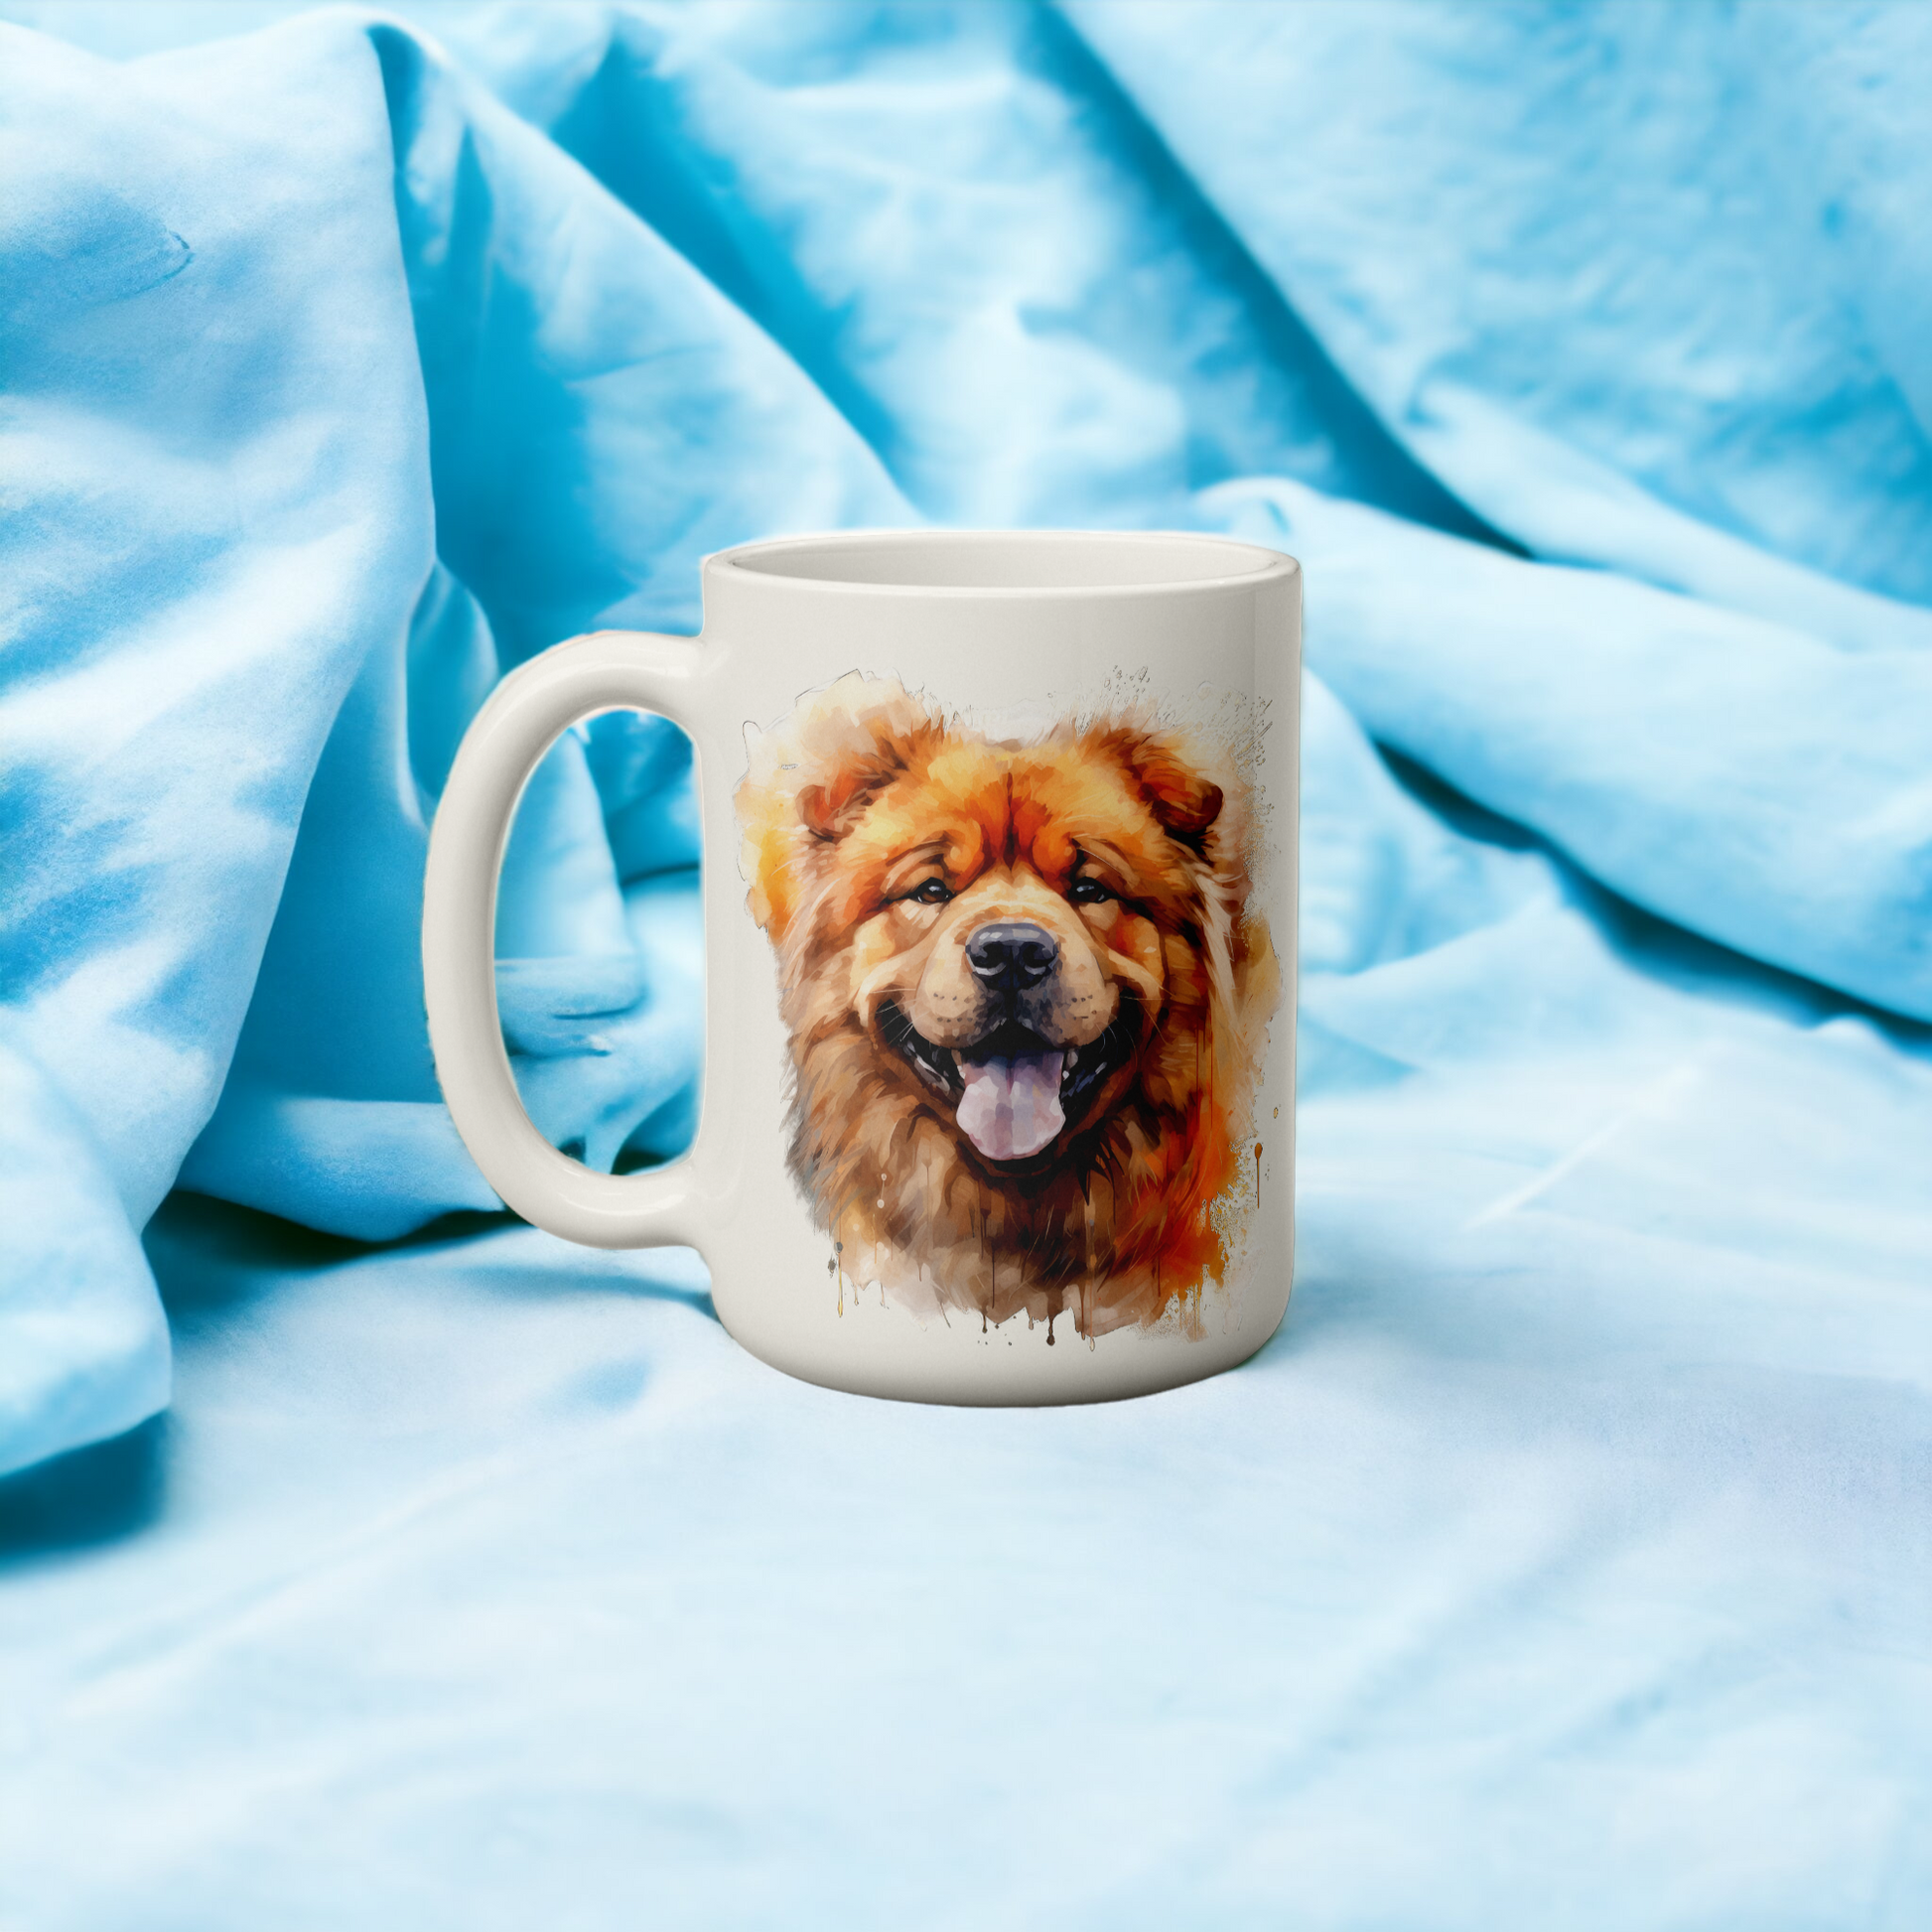  Chow Chow Dog Coffee Mug by Free Spirit Accessories sold by Free Spirit Accessories